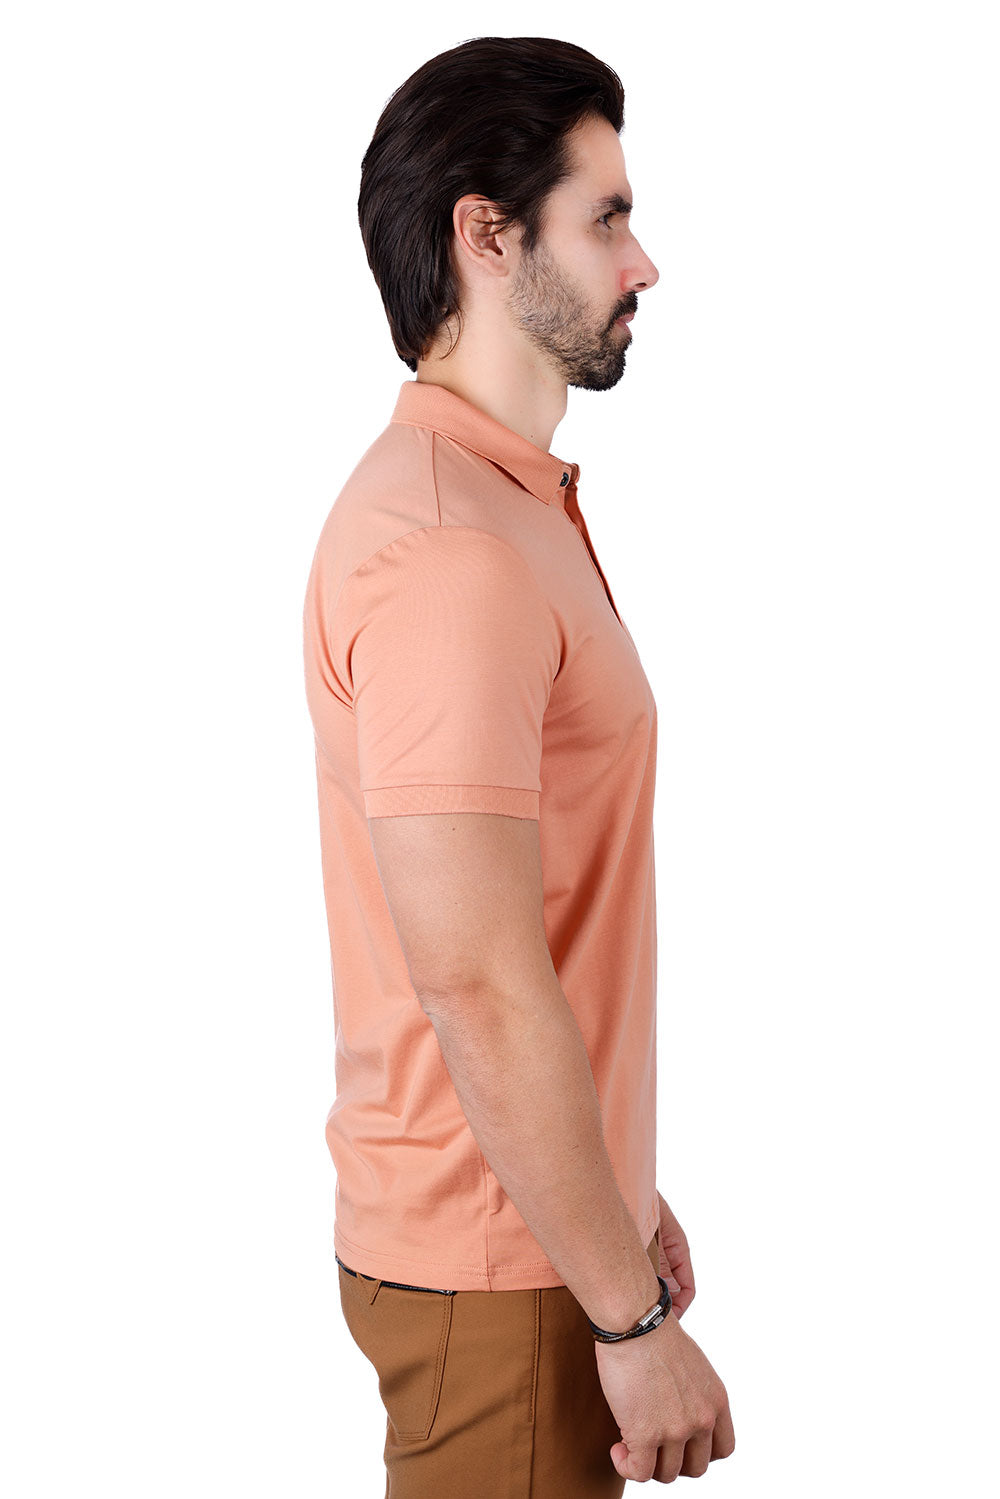 Barabas Men's Solid Color Premium Short Sleeve Logo polo Shirts 3PS128 Pink